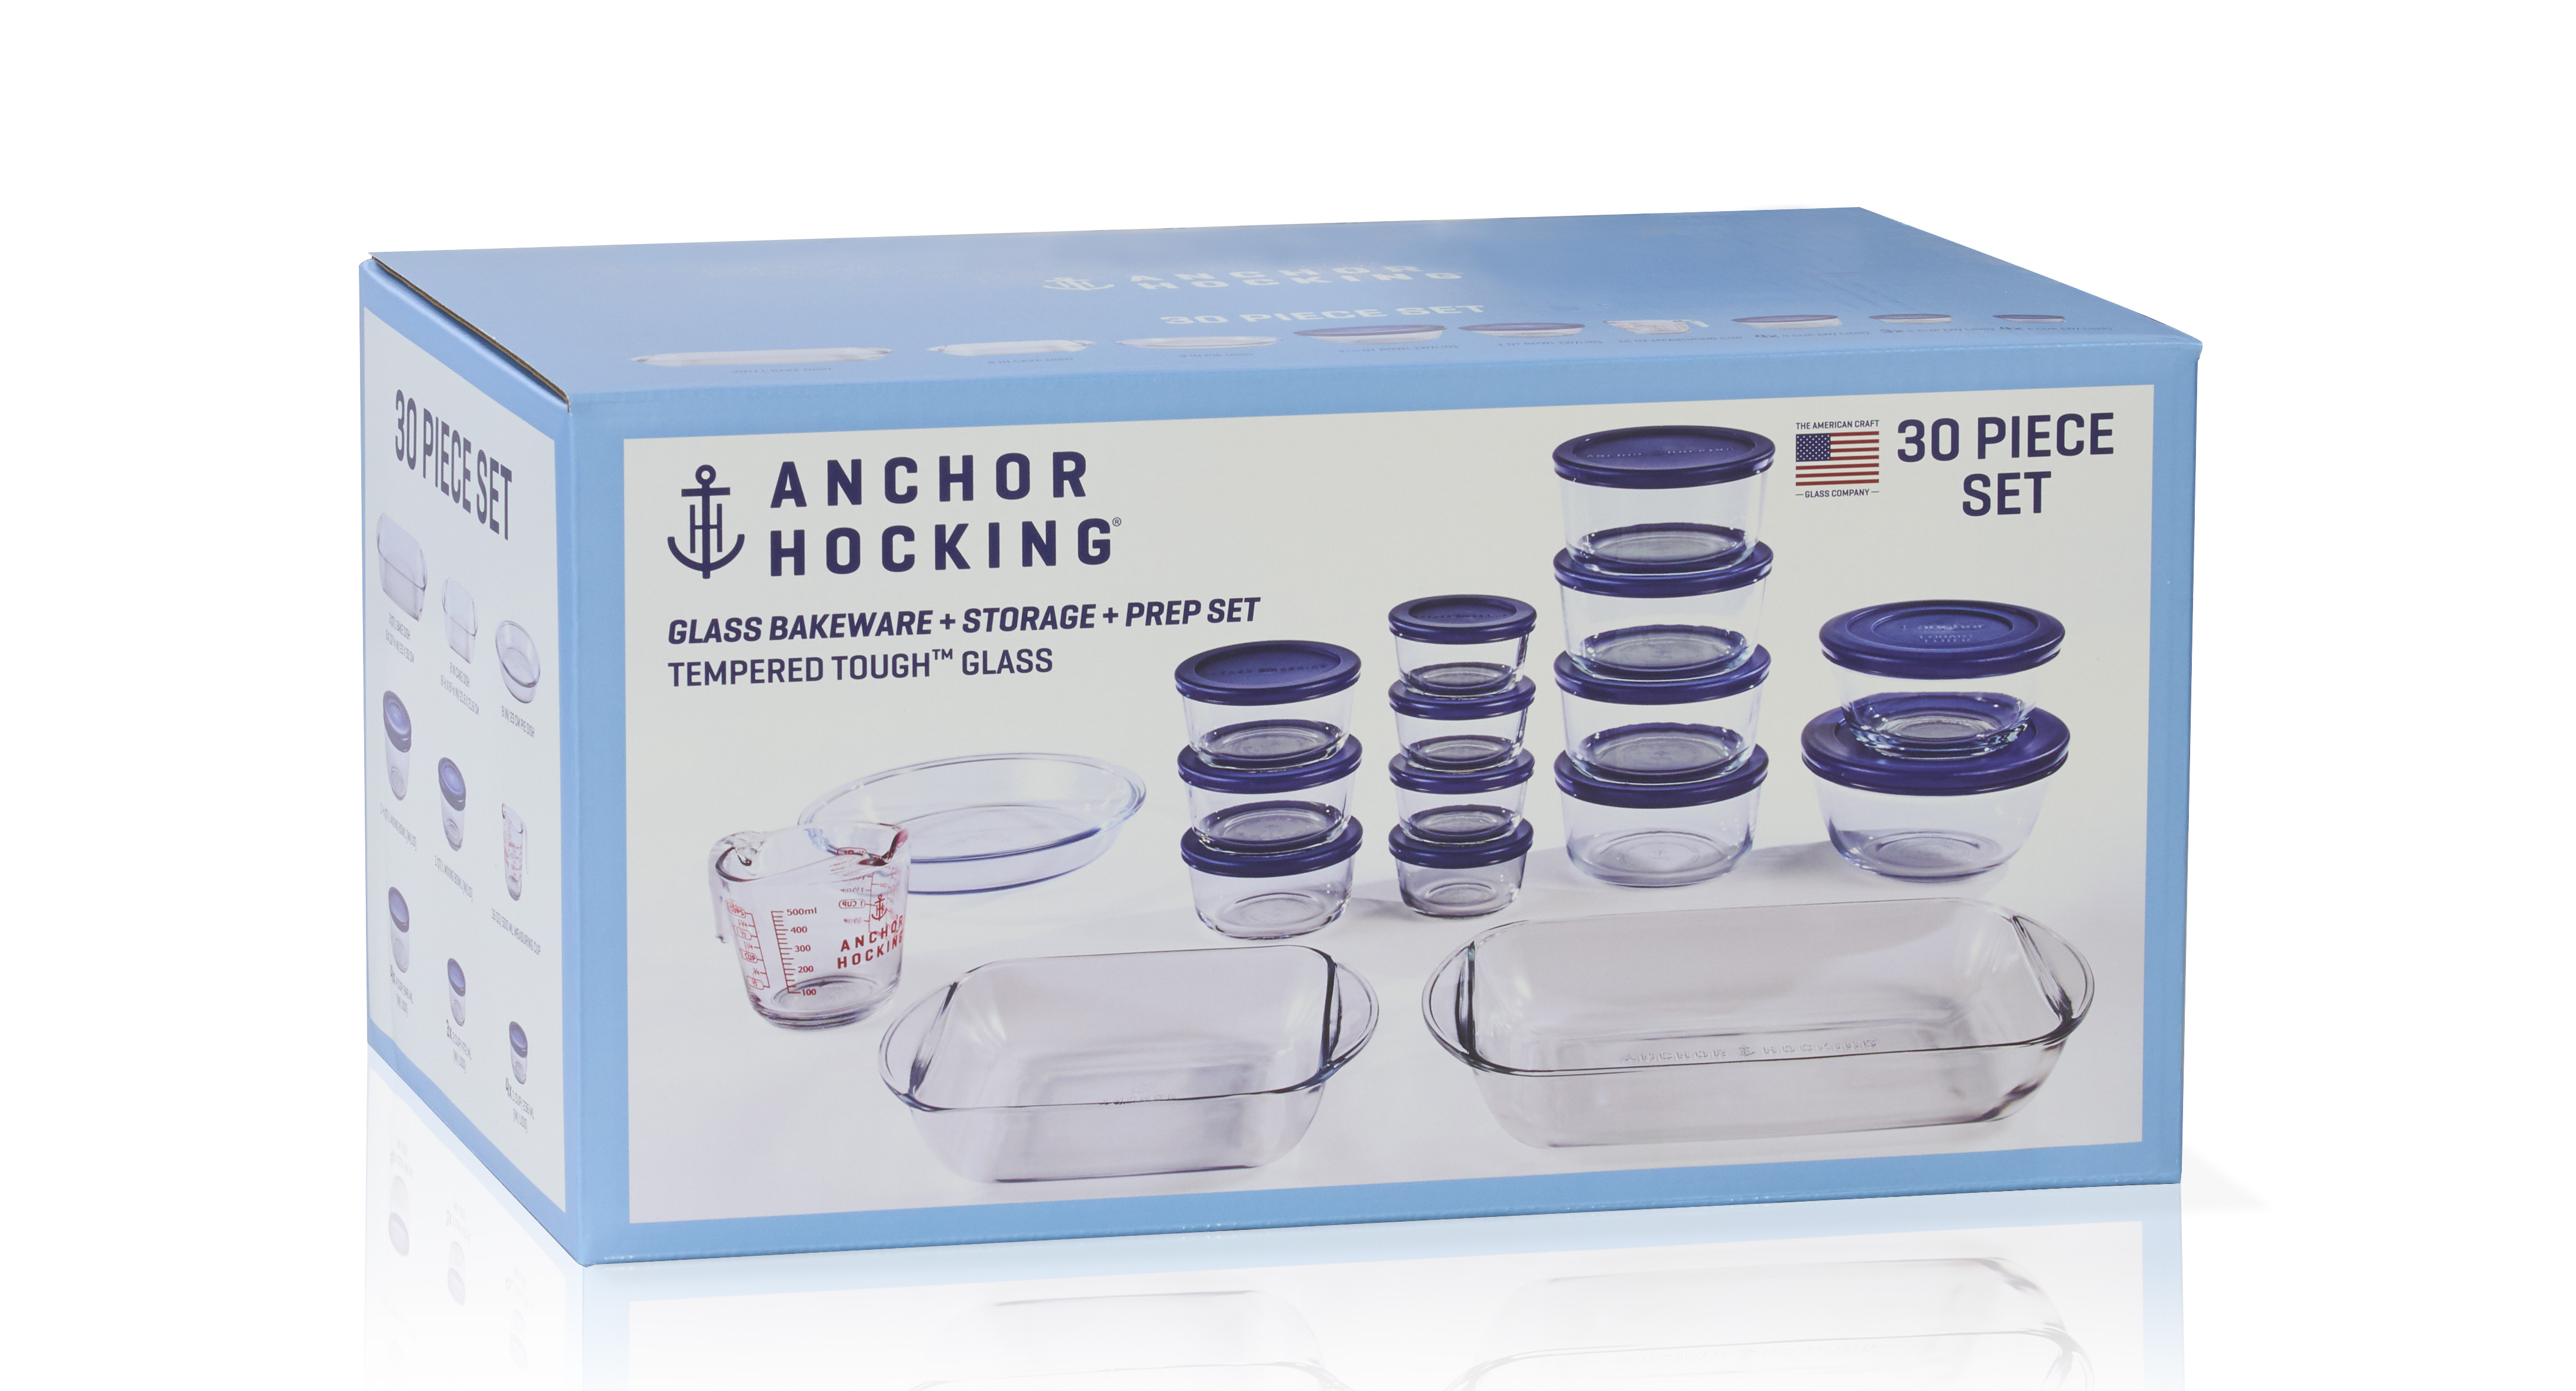 Anchor Hocking Glass Bakeware, Food Storage & Prep Dish Set, 30 Piece - image 2 of 9